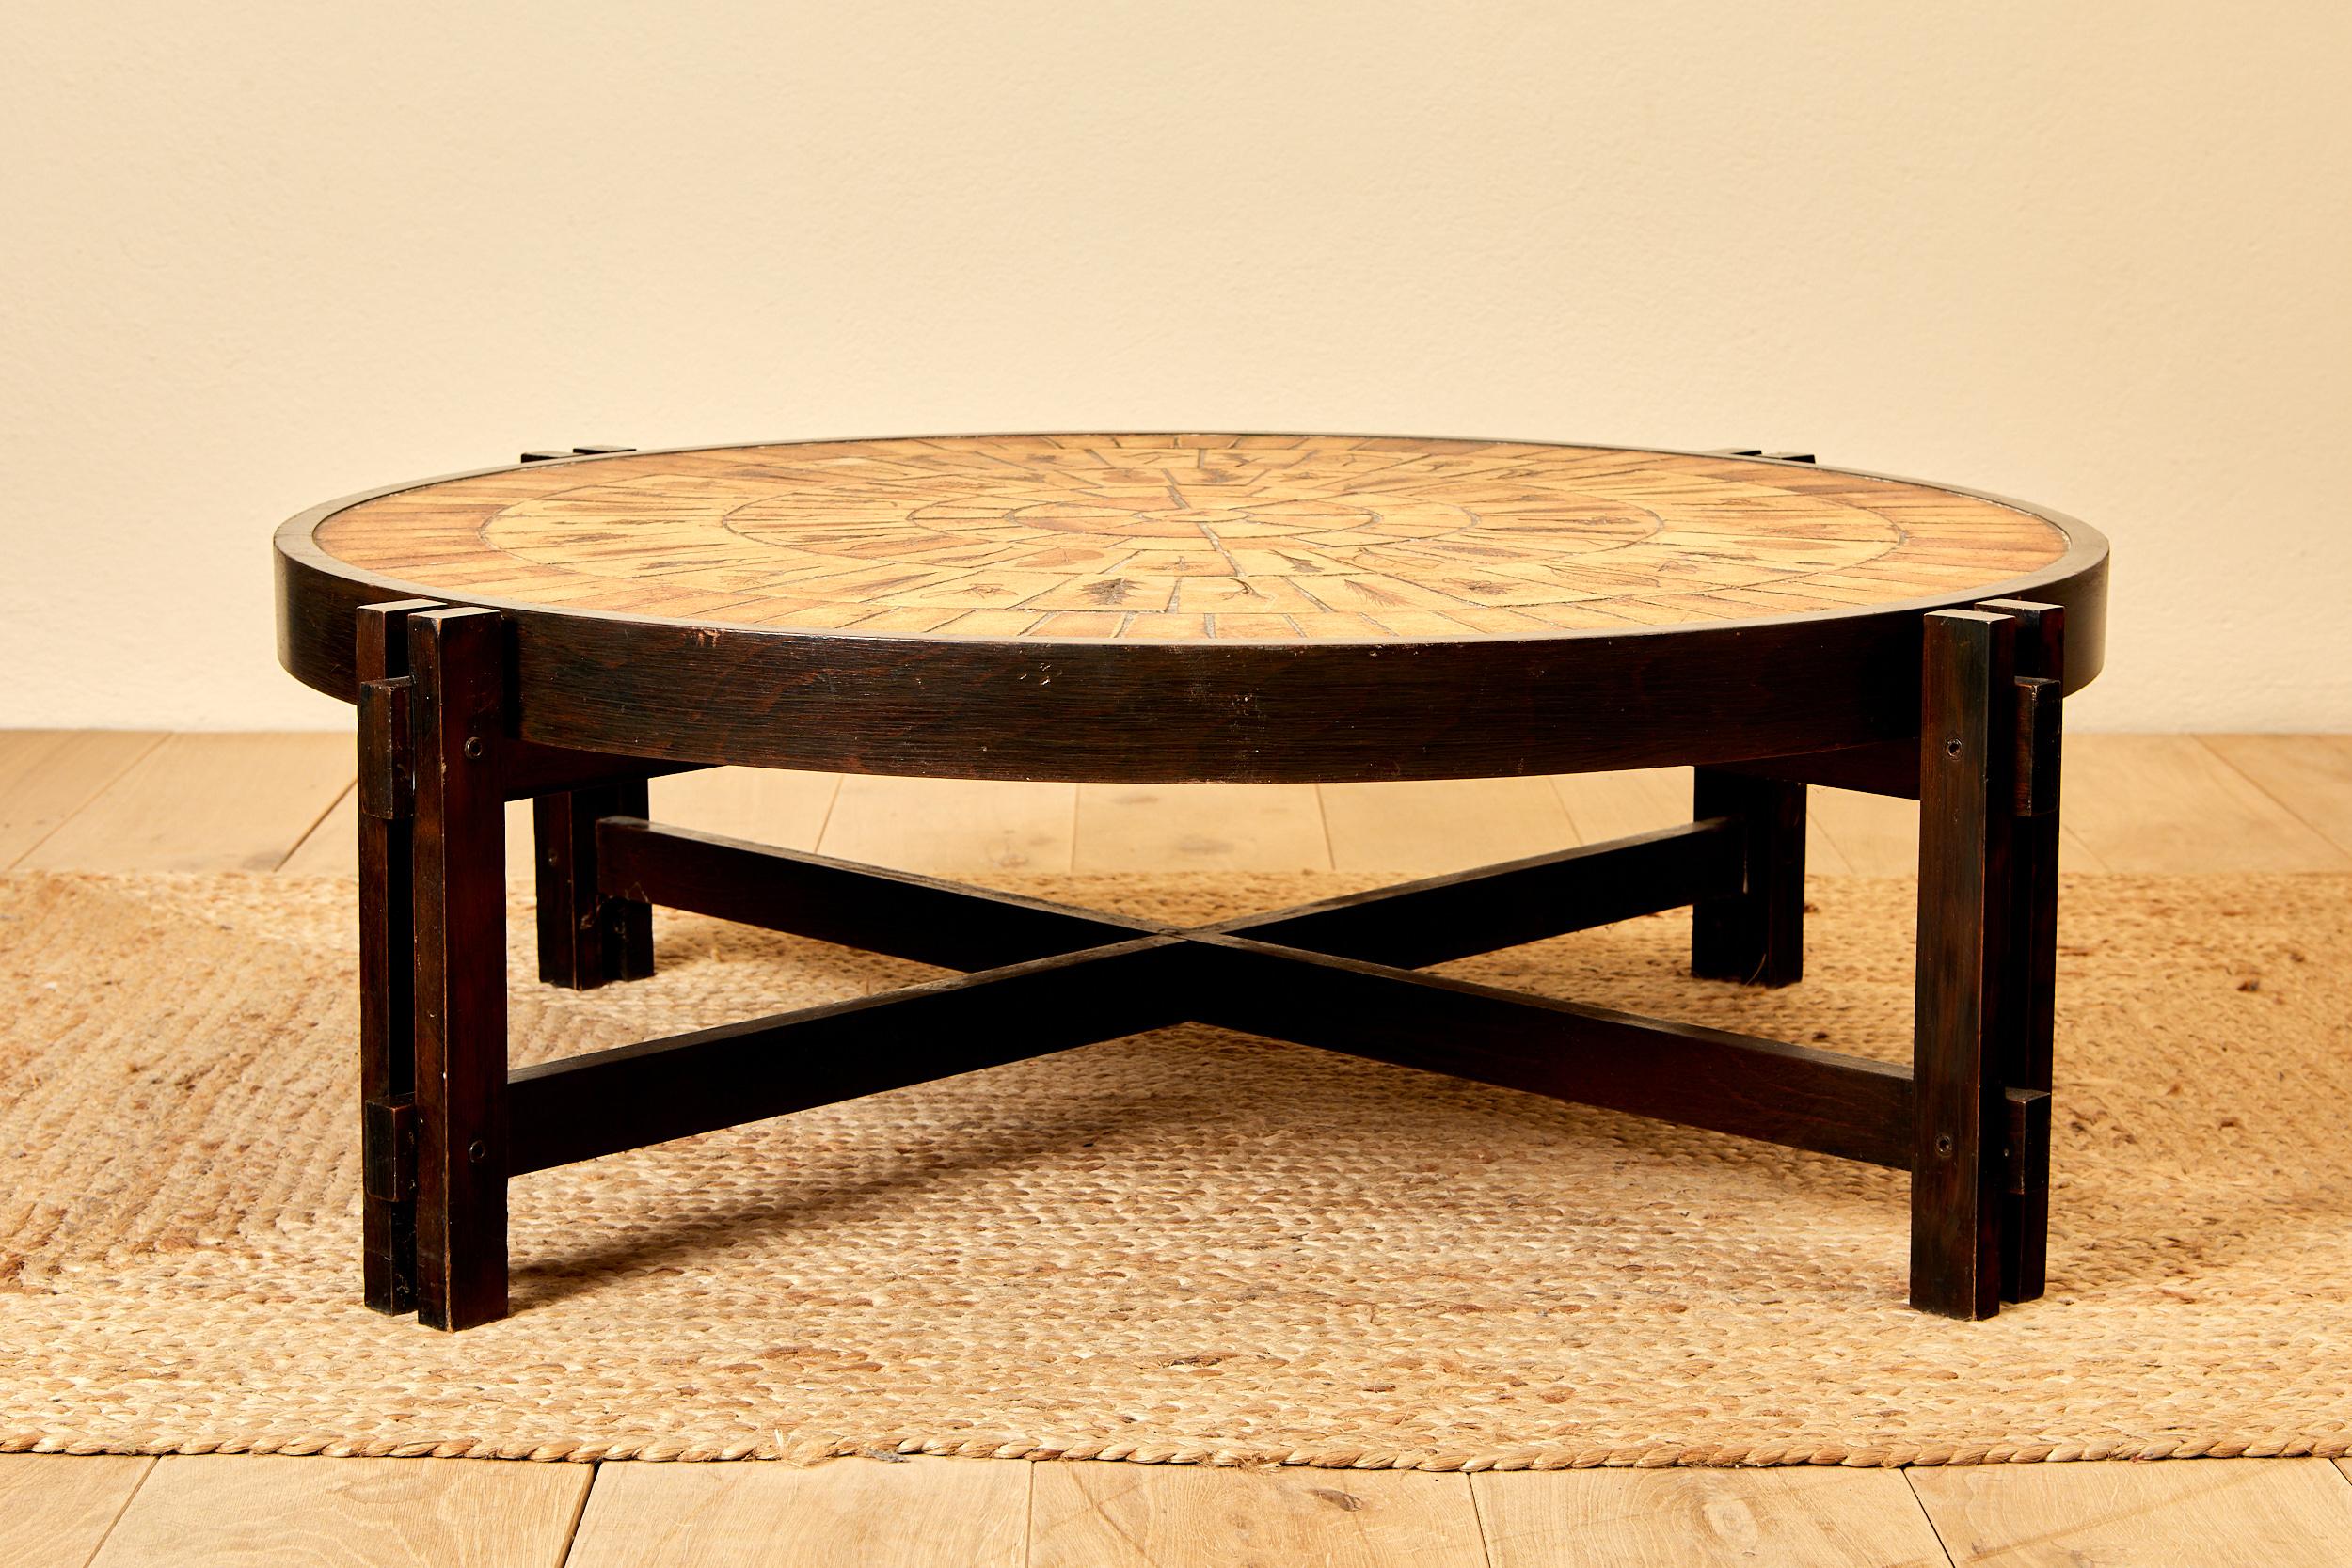 Ceramic Roger Capron, ceramic coffee table, wood, circa 1960, France.